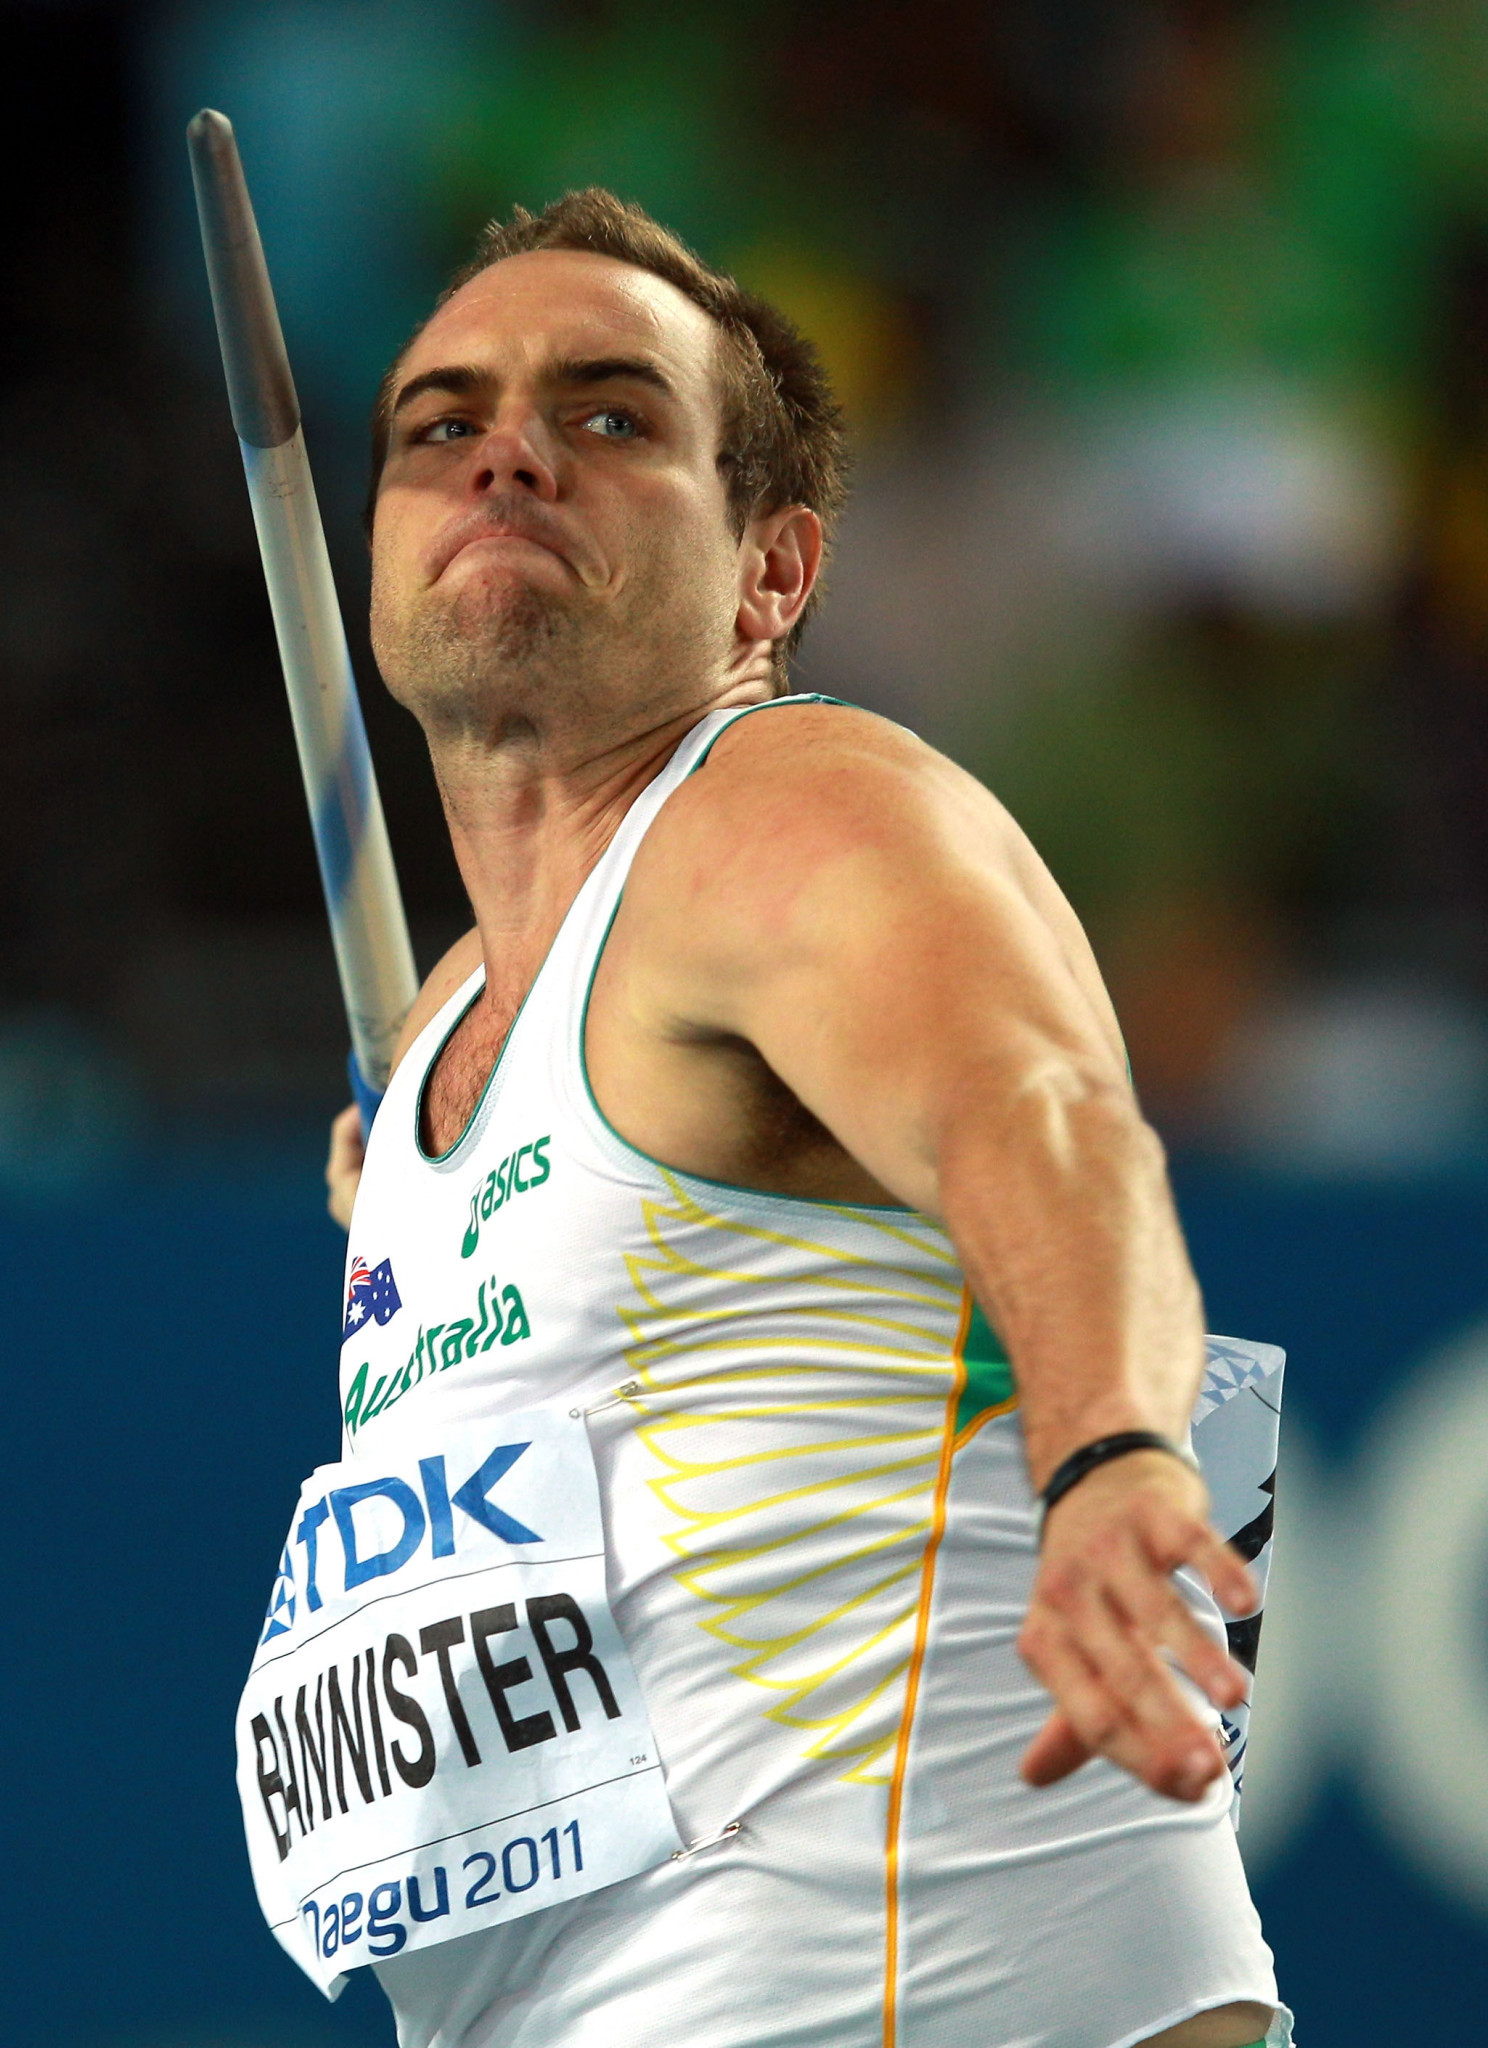 Commonwealth Games javelin gold medallist Bannister dies aged 33